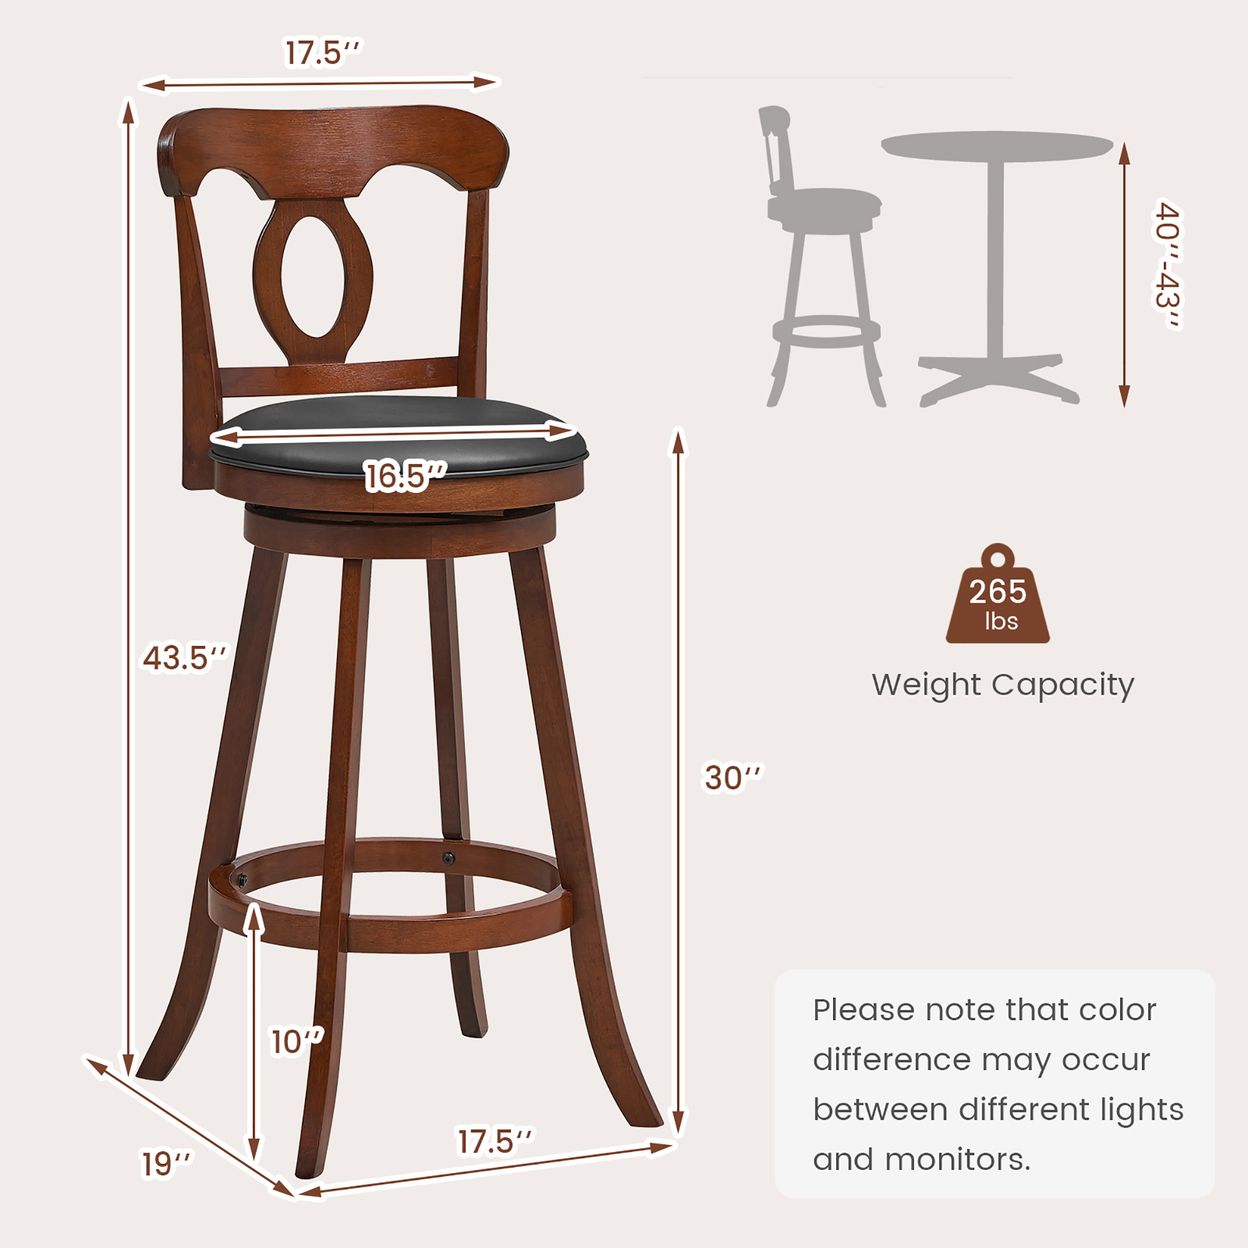 4 PCS Swivel Bar Stools 30 Inch Bar Height Chairs W/ Ergonomic Backrest Espresso